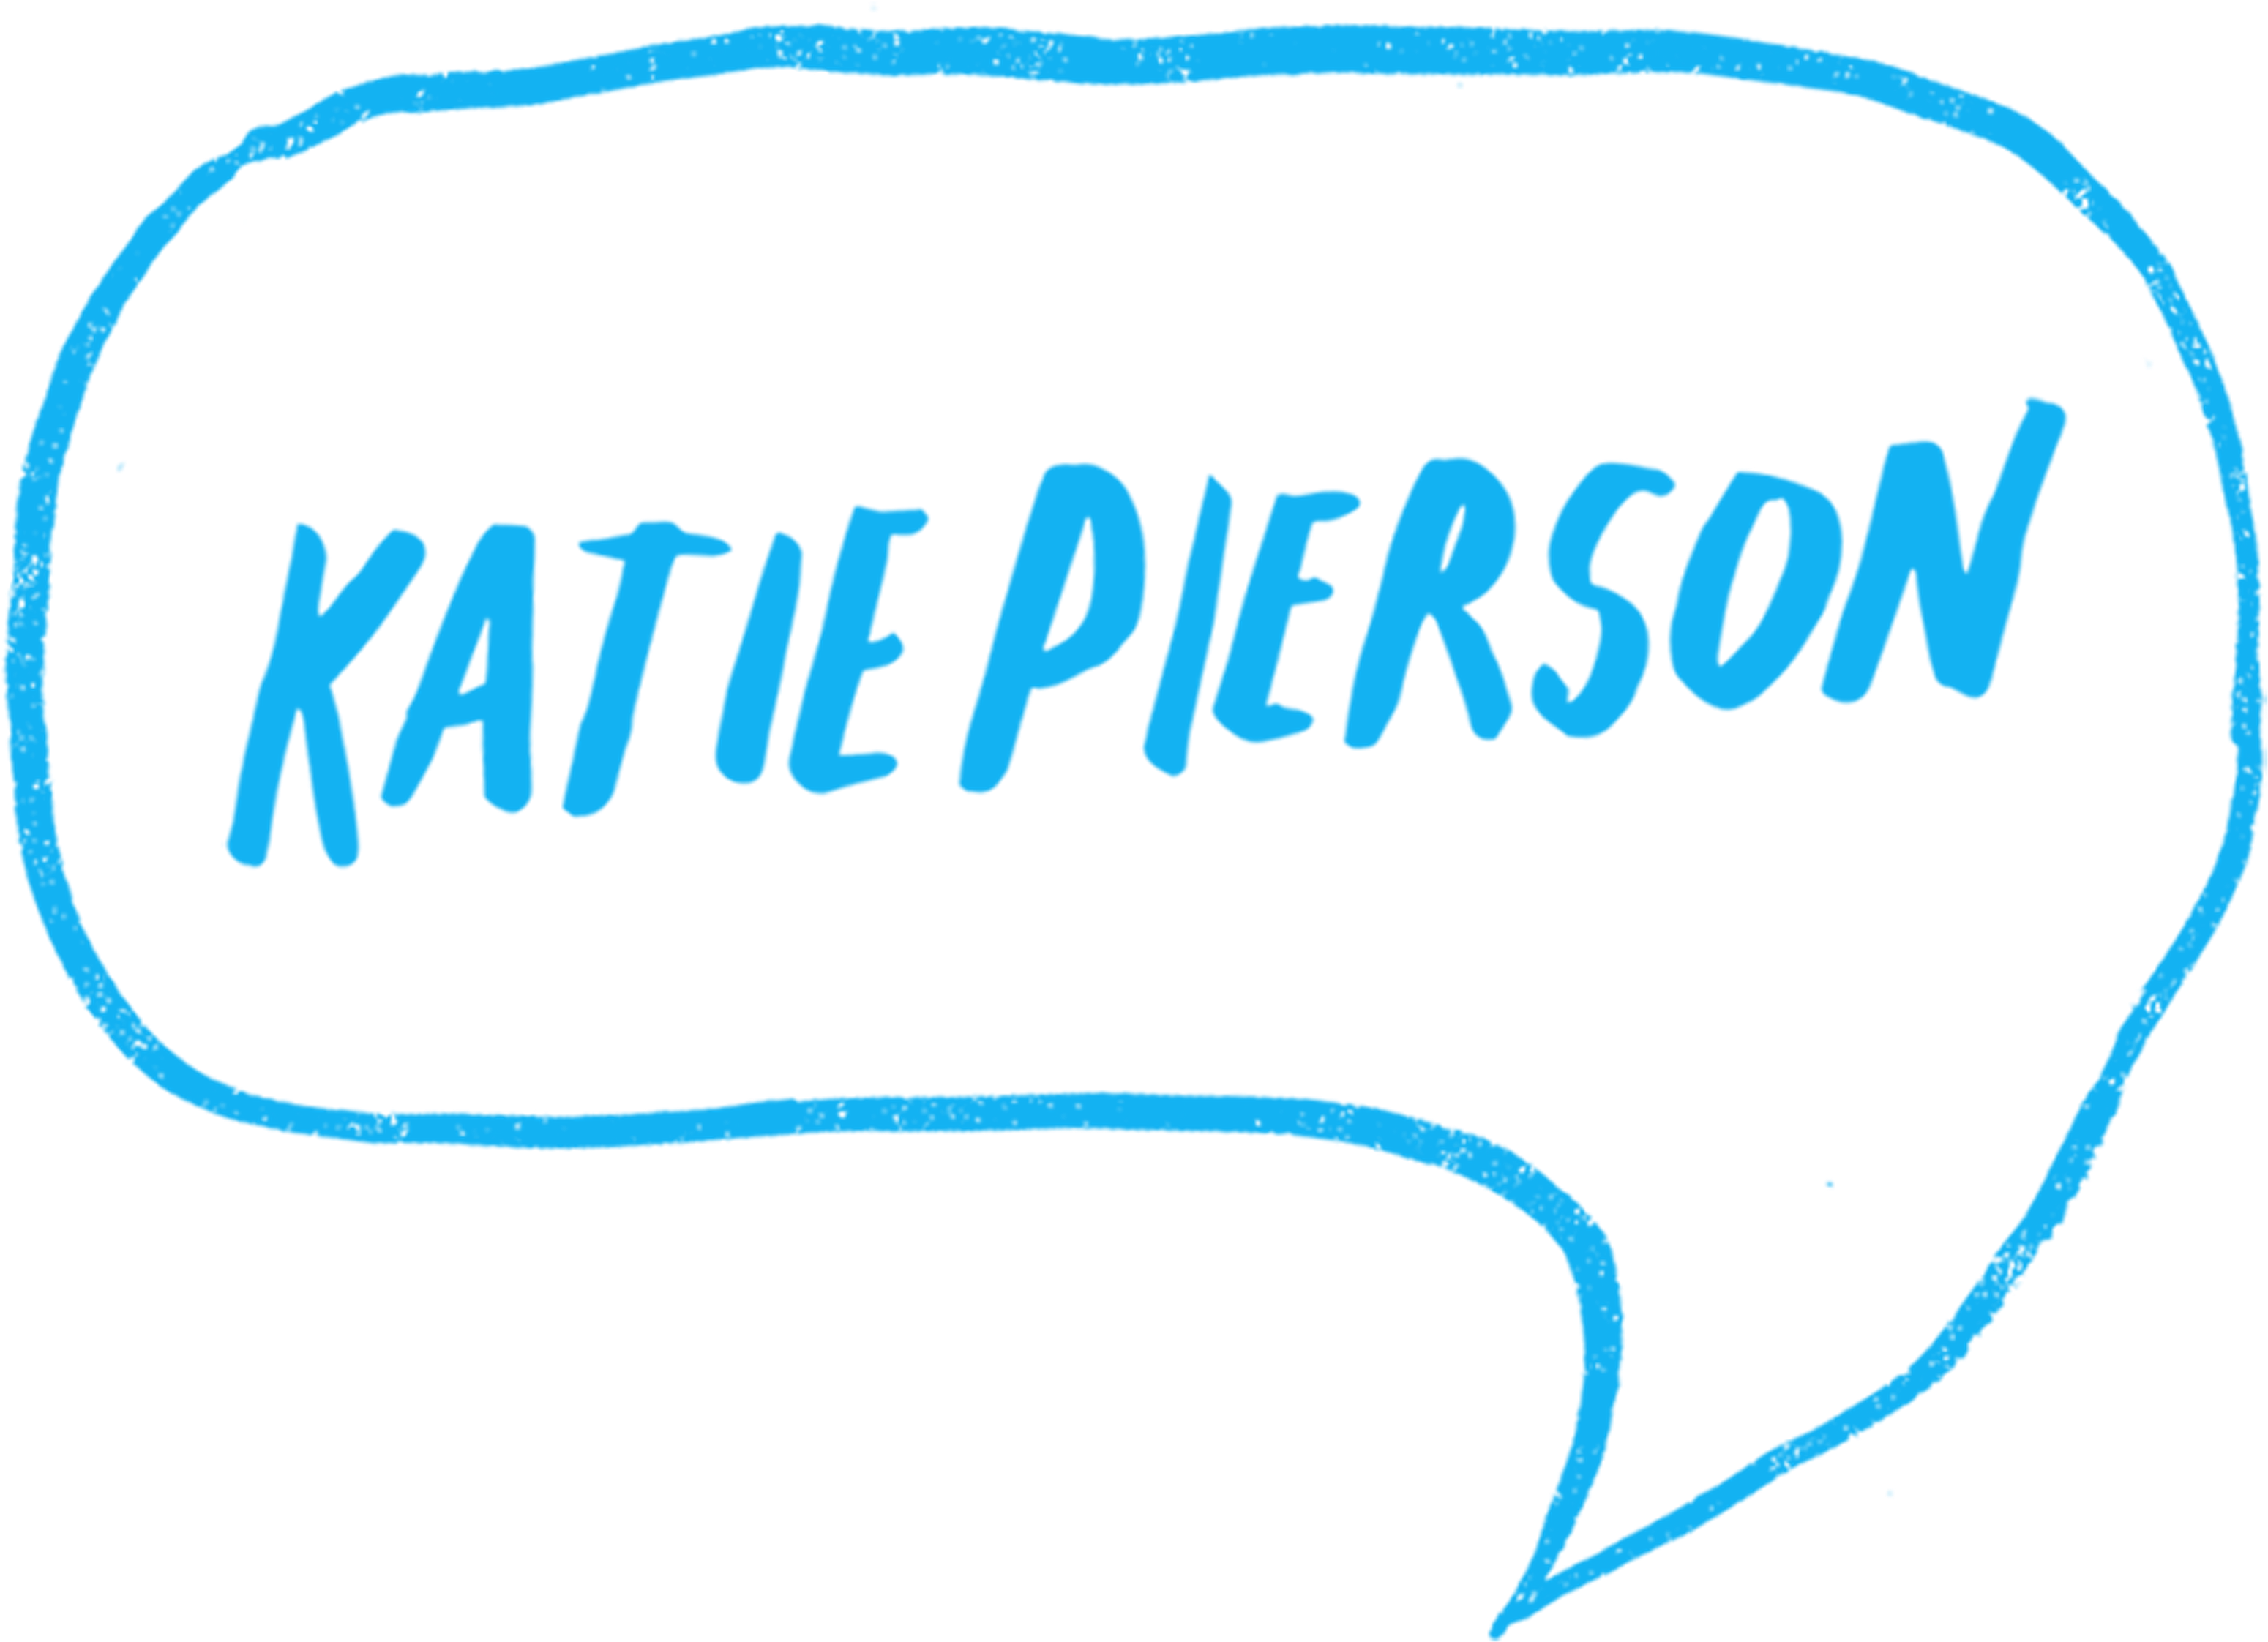 College Application Essay Editor For Hire Katie Pierson - Marketing (4500x3294)